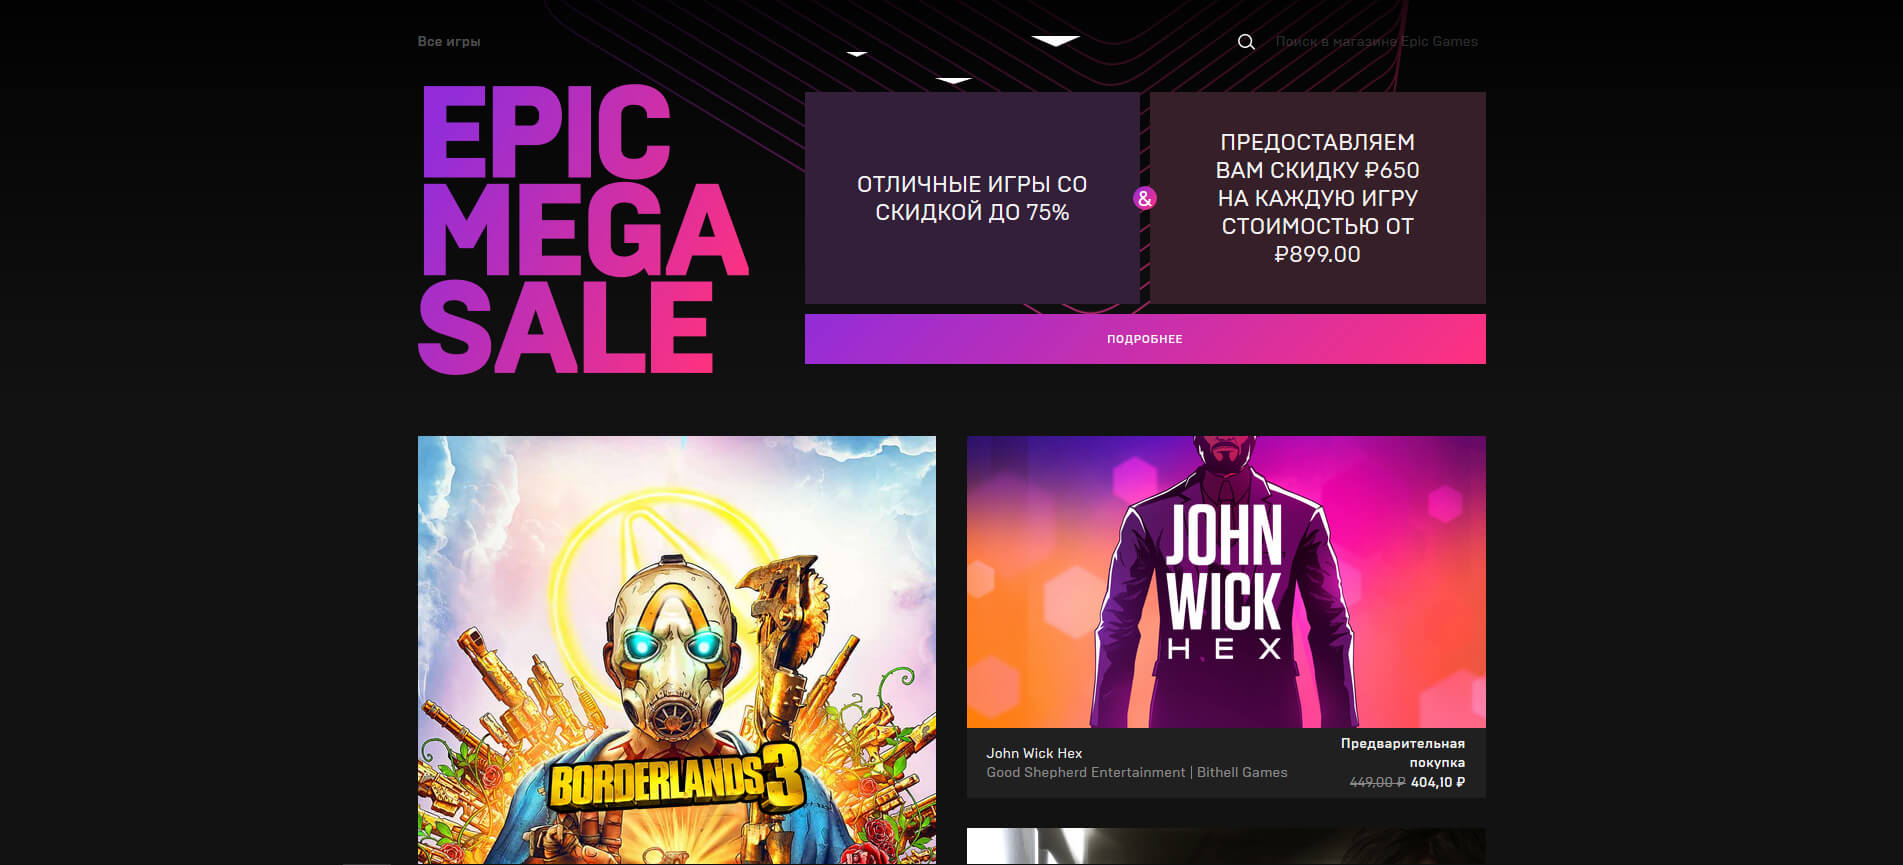 В Epic Games Store стартовала мегараспродажа (фото)